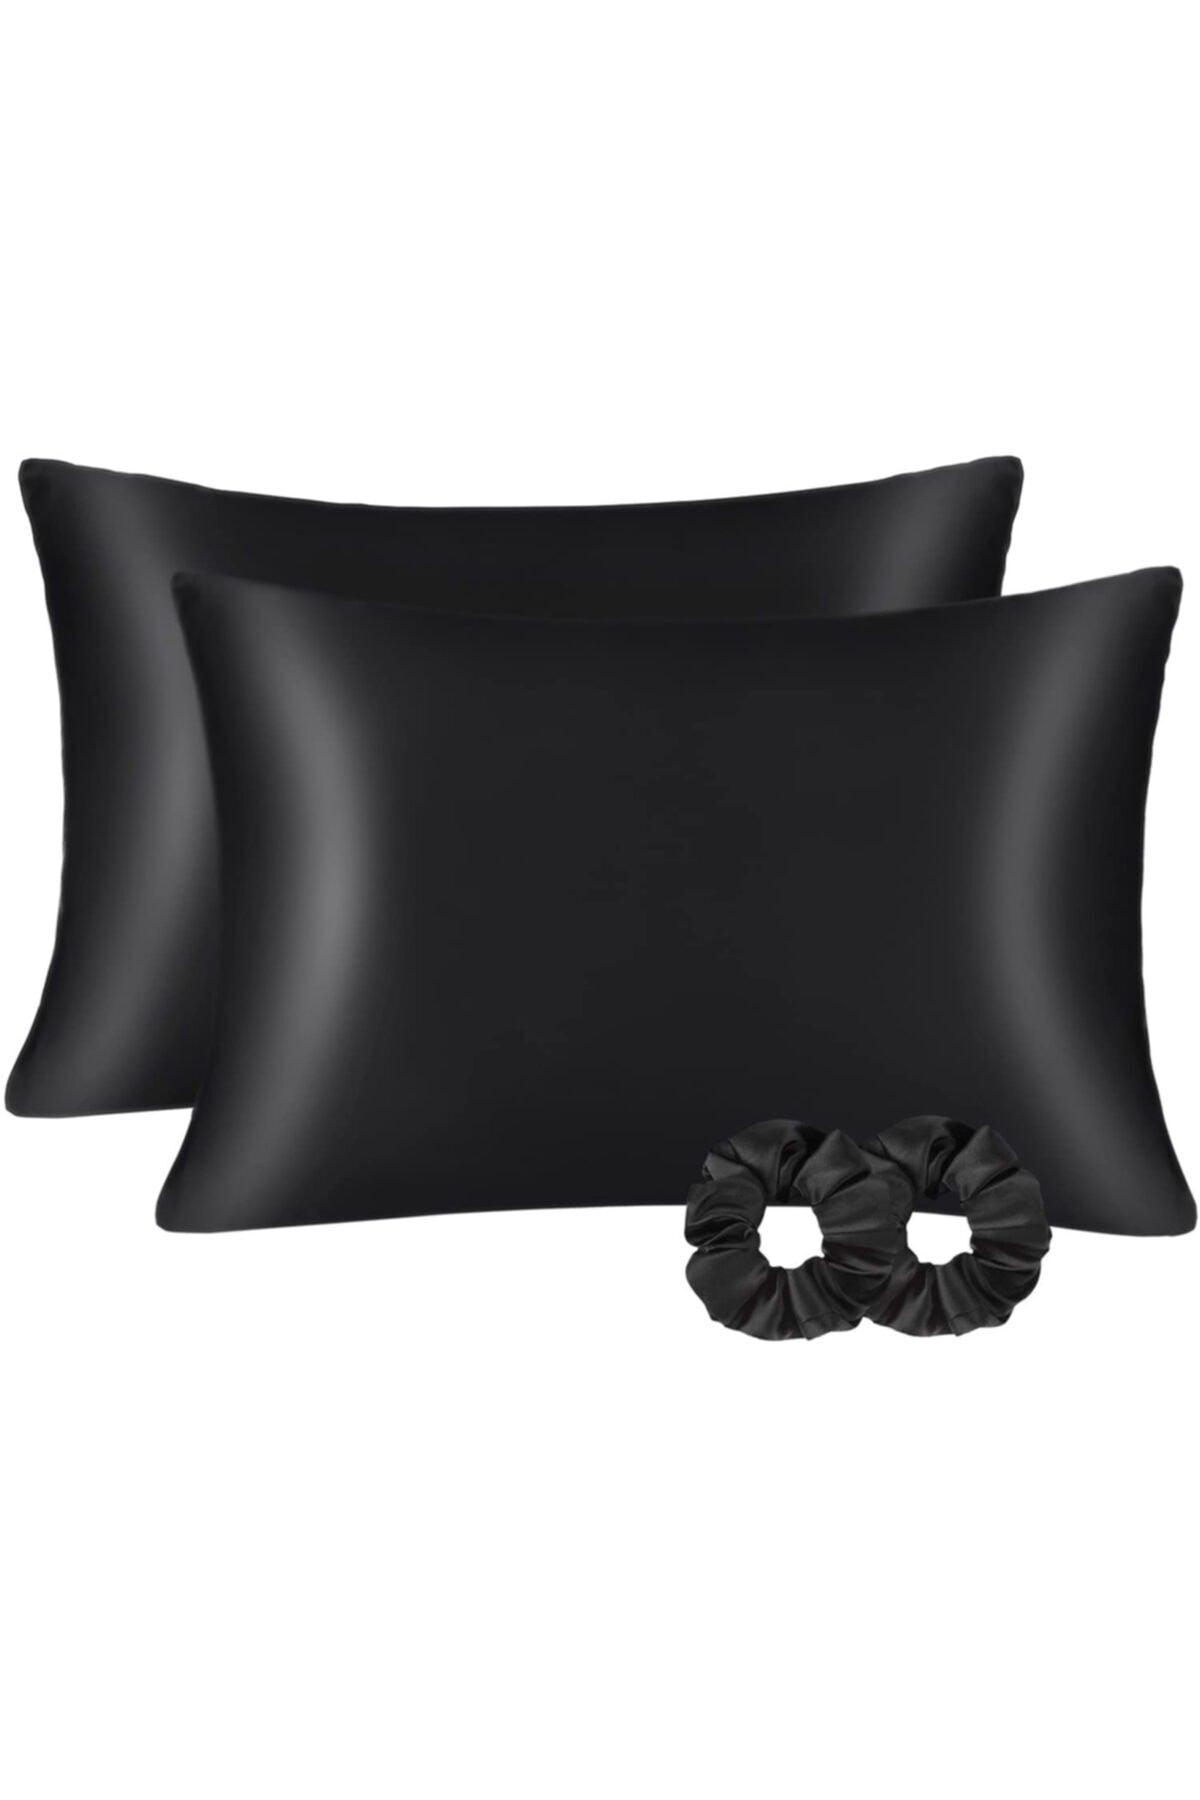 100% Silk Satin 50x70 Cm 2 Pillow Cases & 2 Buckles Black Color - Swordslife